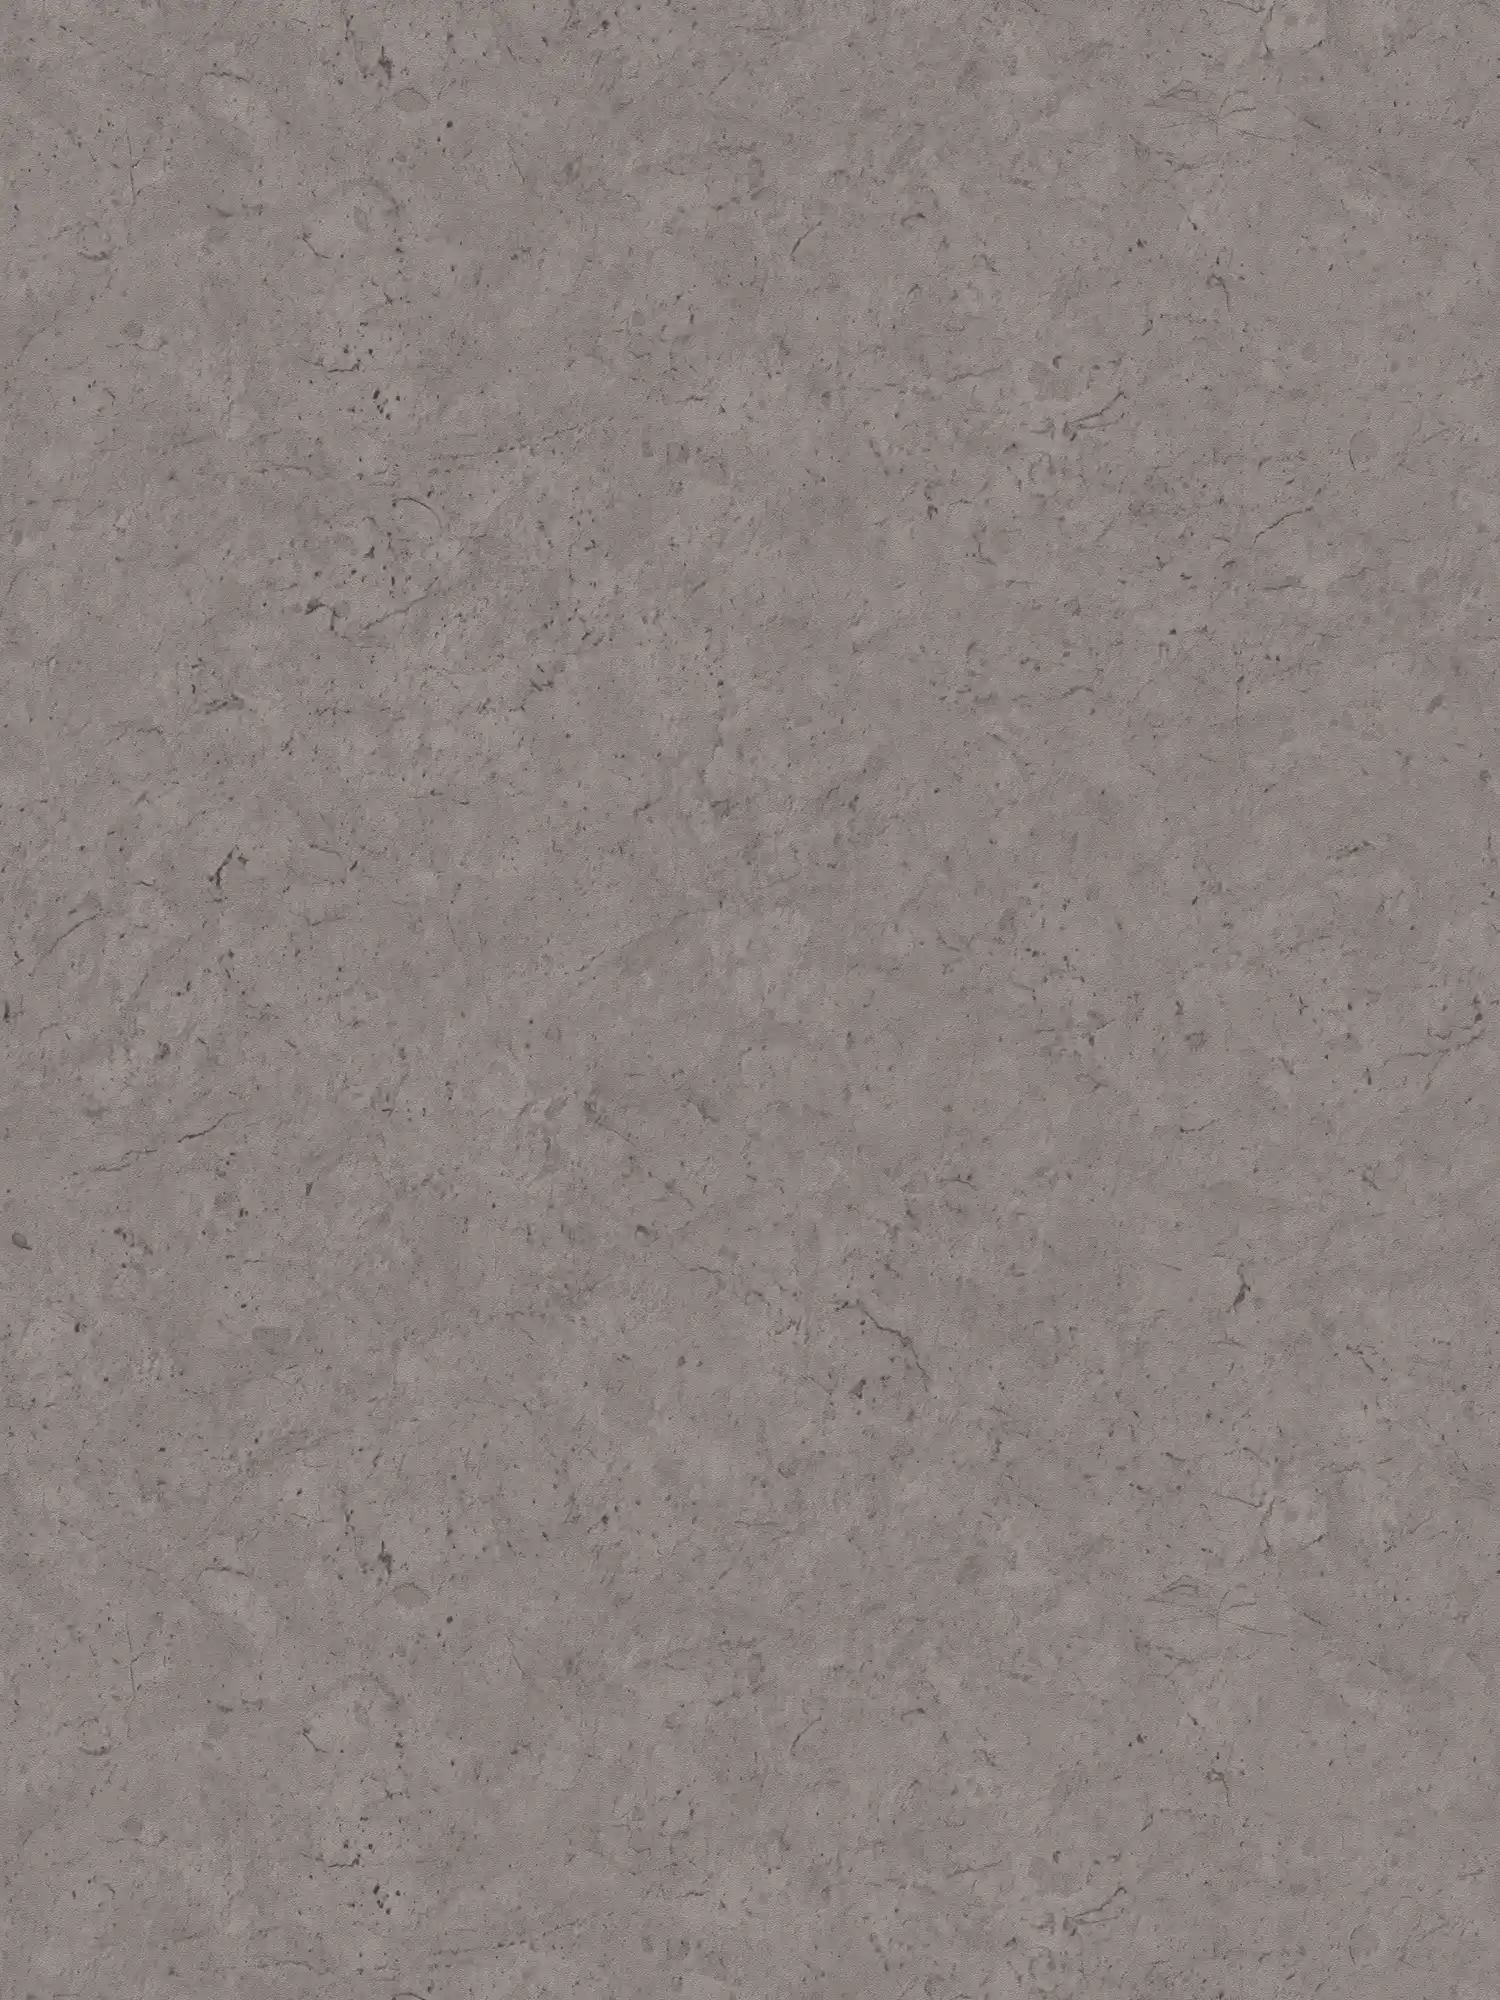 Dark plain wallpaper with subtle concrete look - grey
